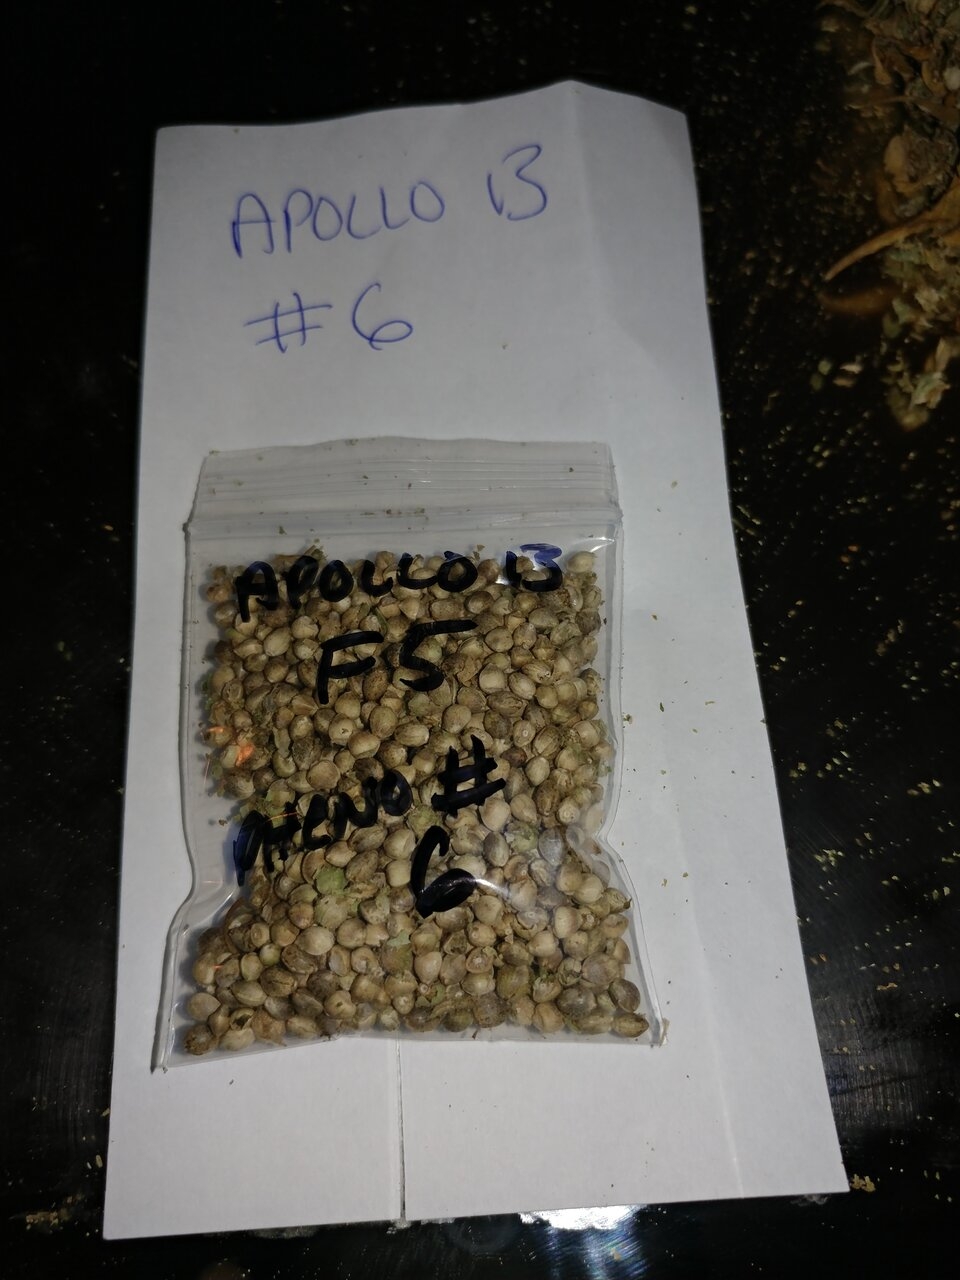 Apollo 13 strain icemud seed project cannabis marijuana (4).jpg